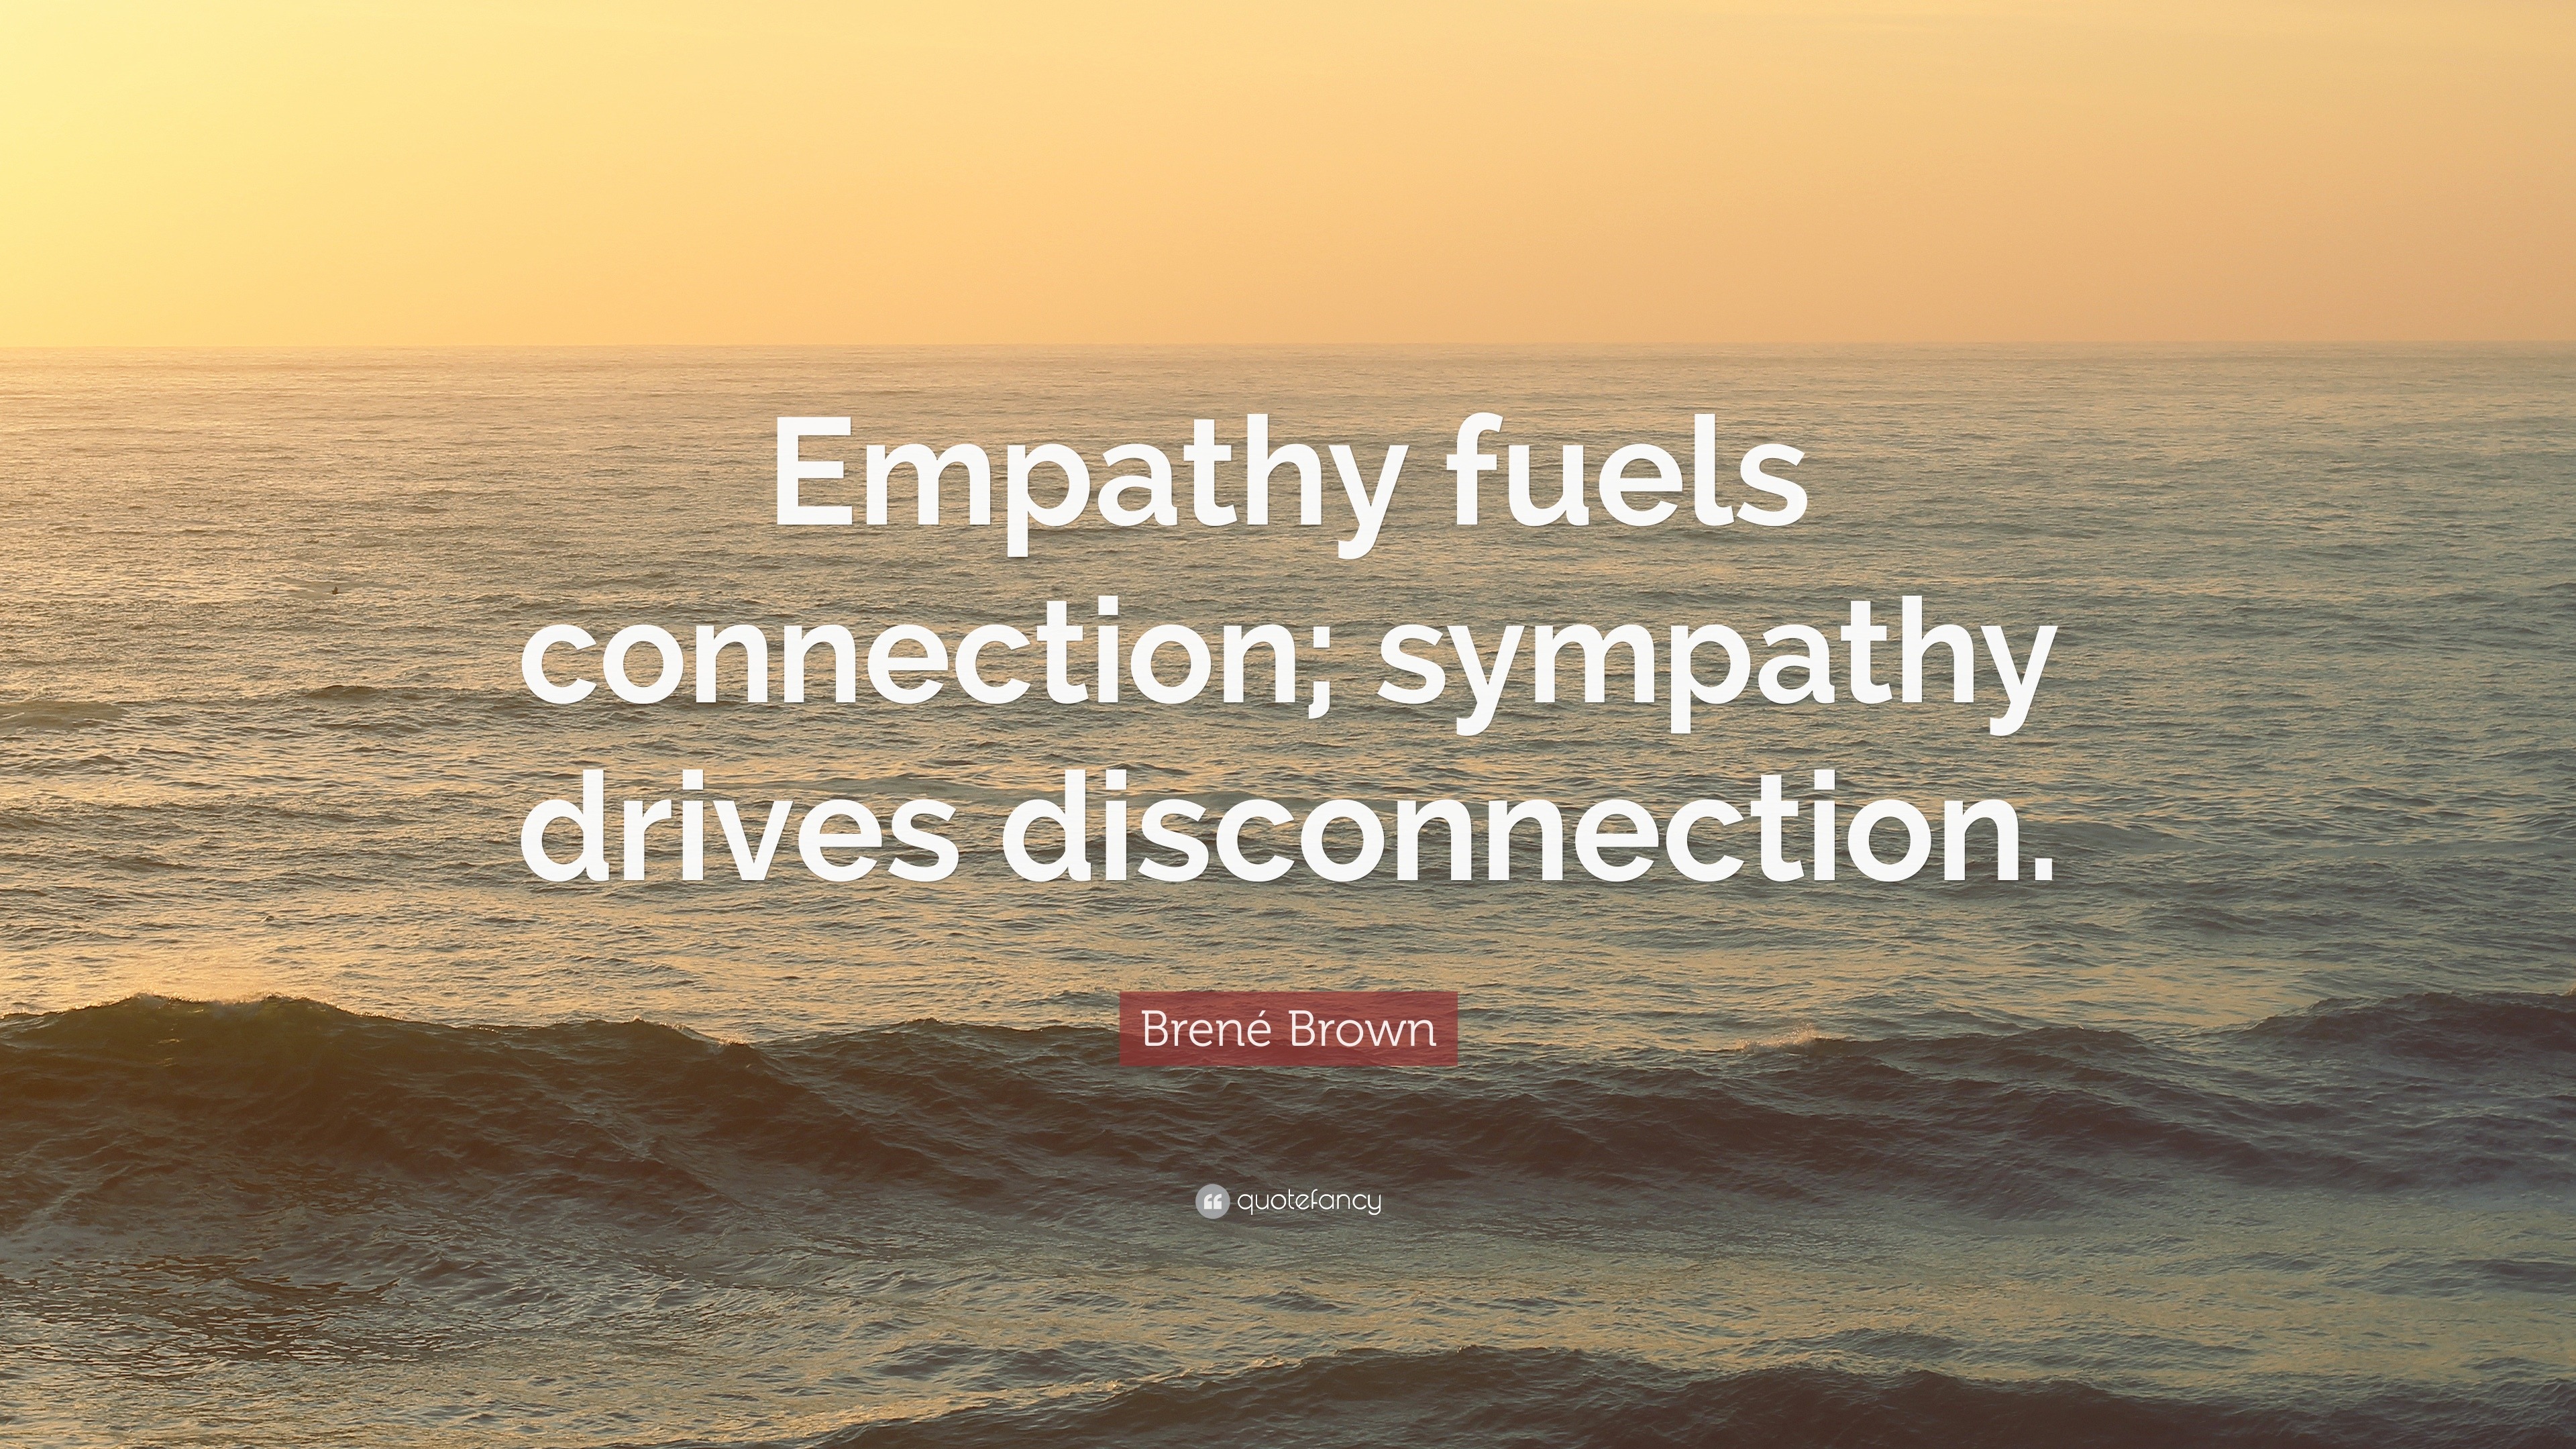 Brené Brown Quote: “Empathy fuels connection; sympathy drives